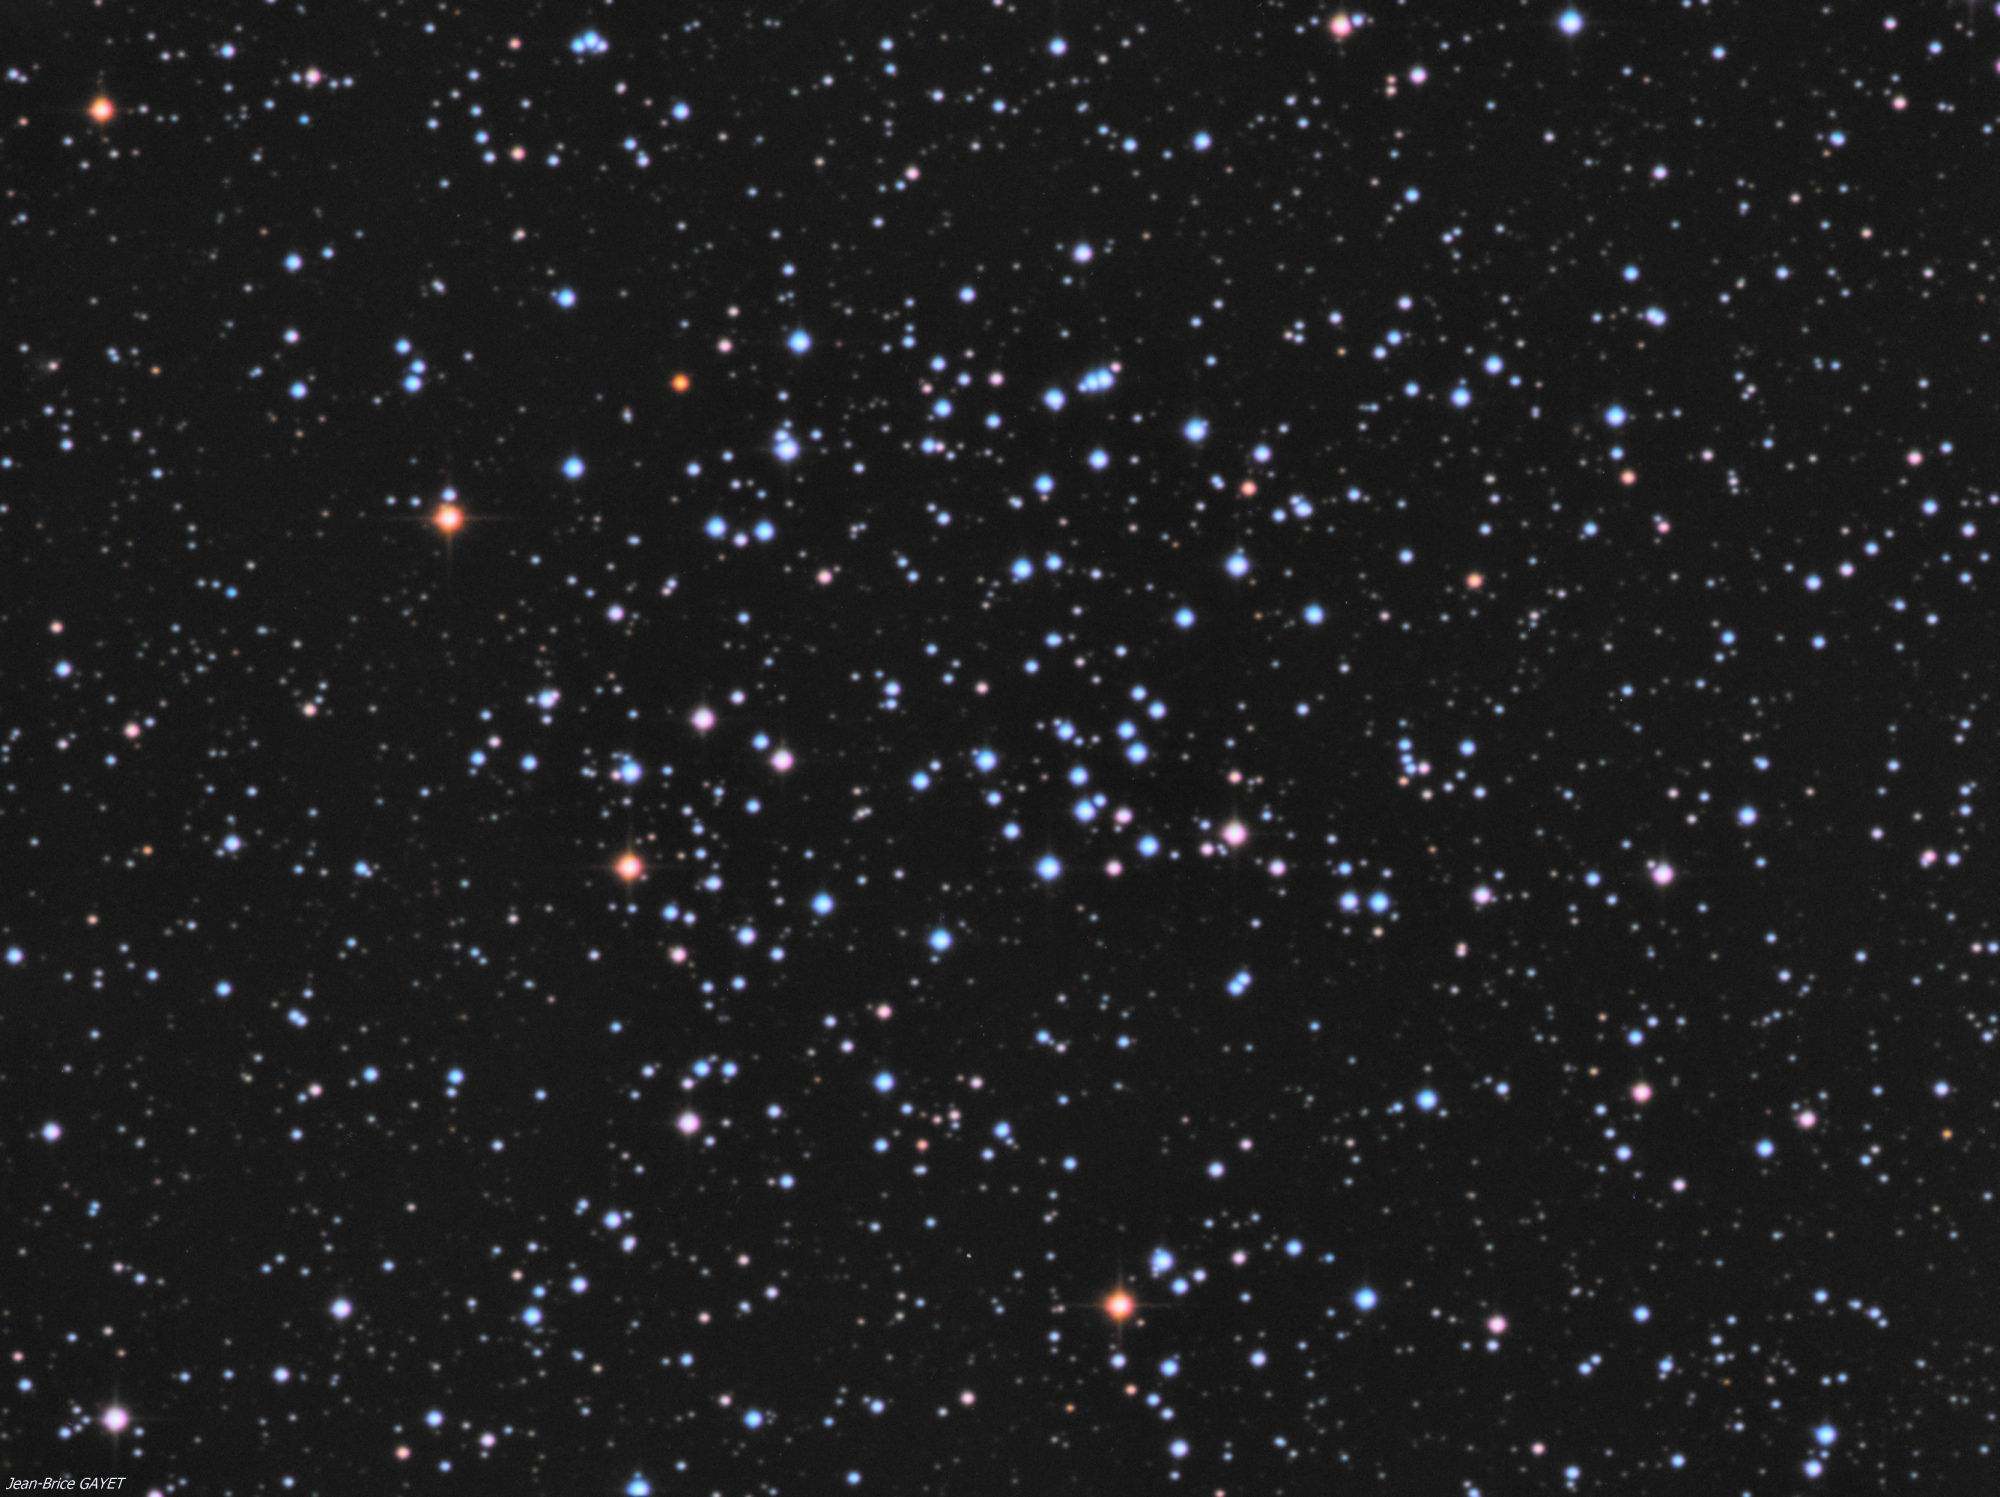 5c99e28057c2a_NGC6811Jean-BriceGAYET.thumb.jpg.861758f508a65b267816a3e66d38b15d.jpg